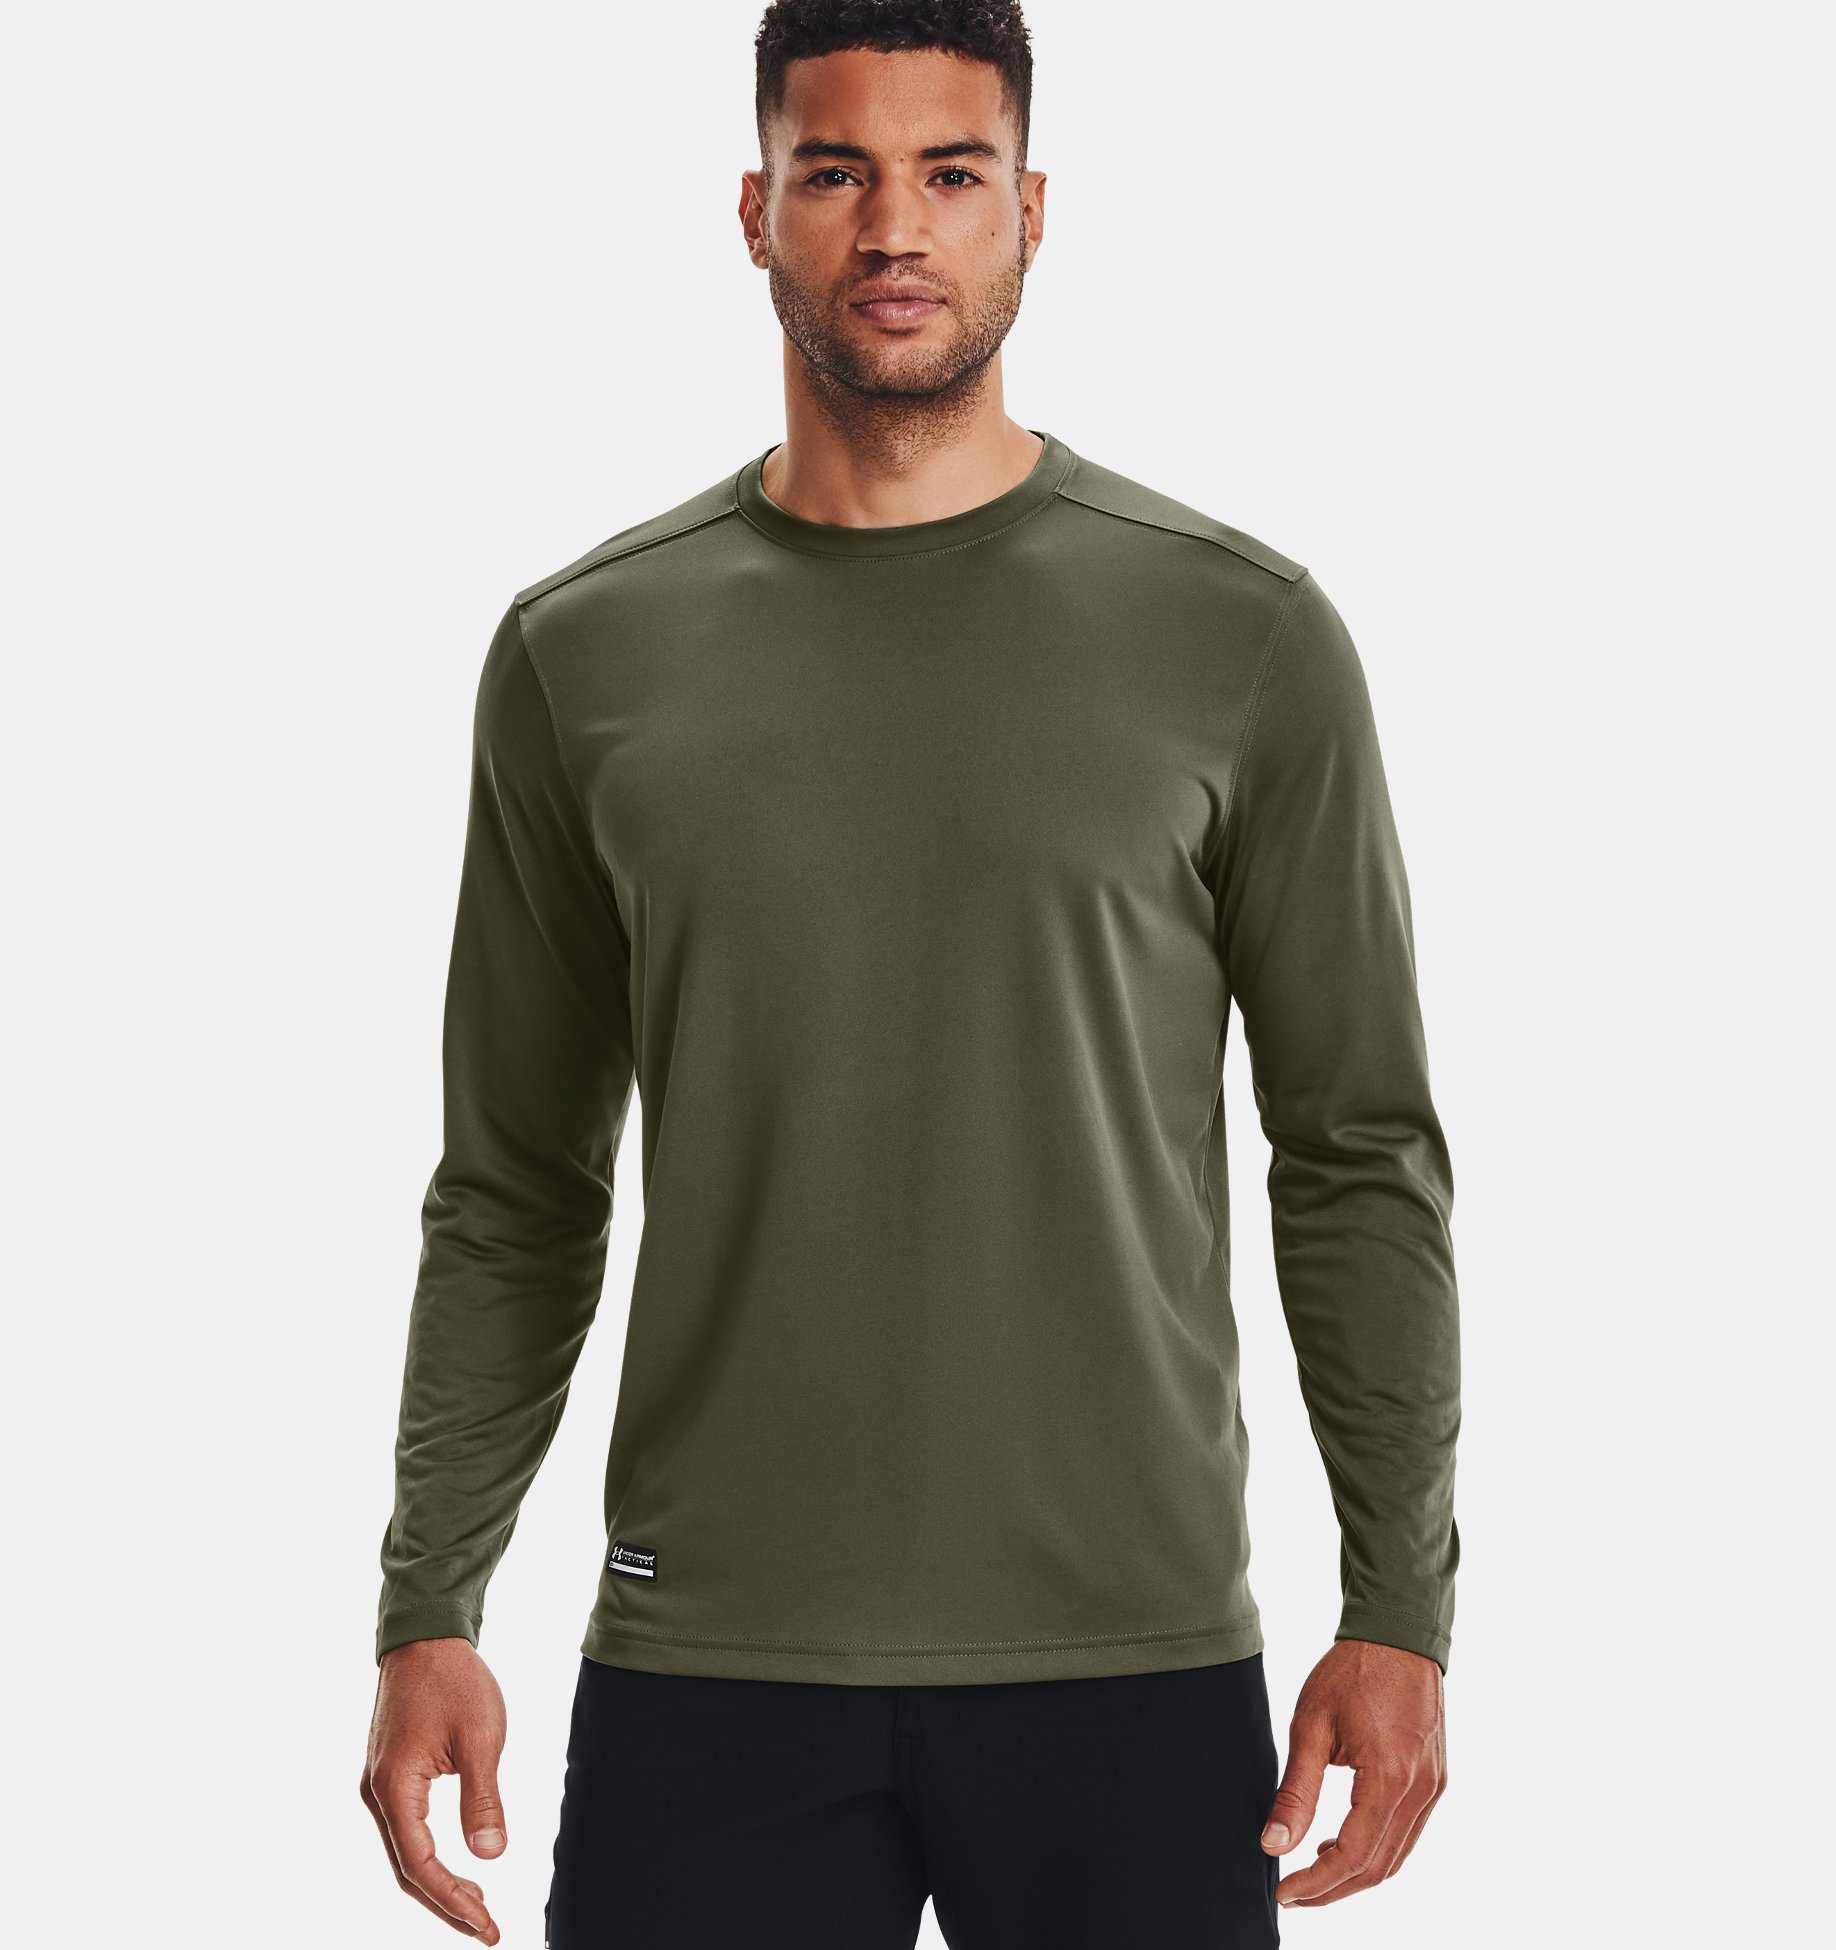 Men's Under Armour Heatgear Loose Cotton/Polyester Long Sleeve Shirt 